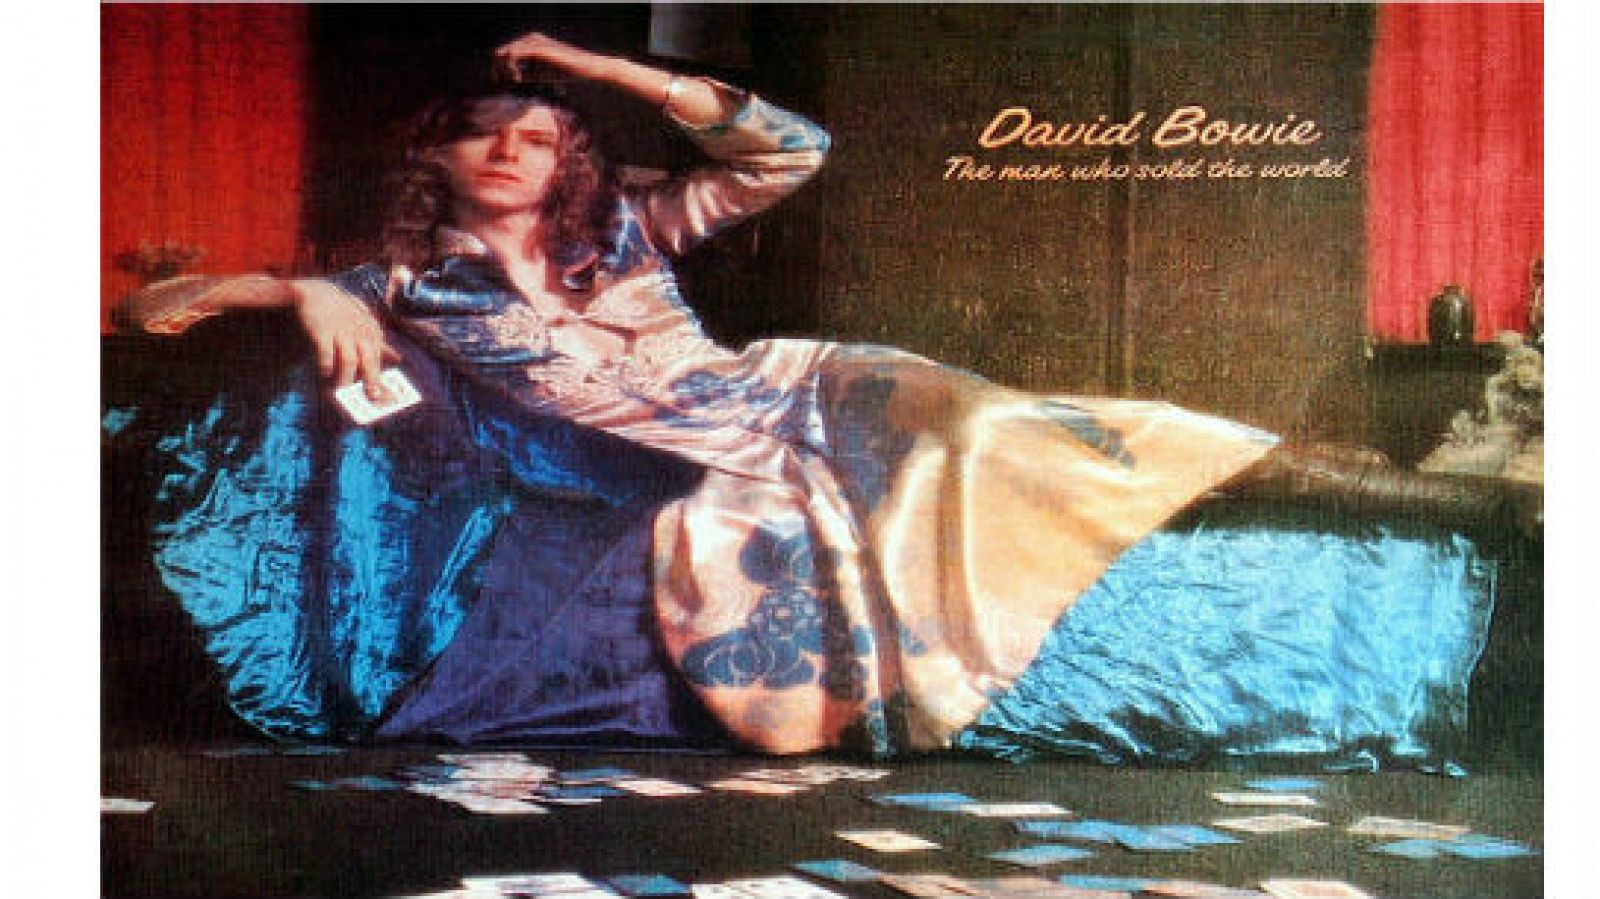 La hemerockteca - "The man who sold the world" David Bowie (1970 ...